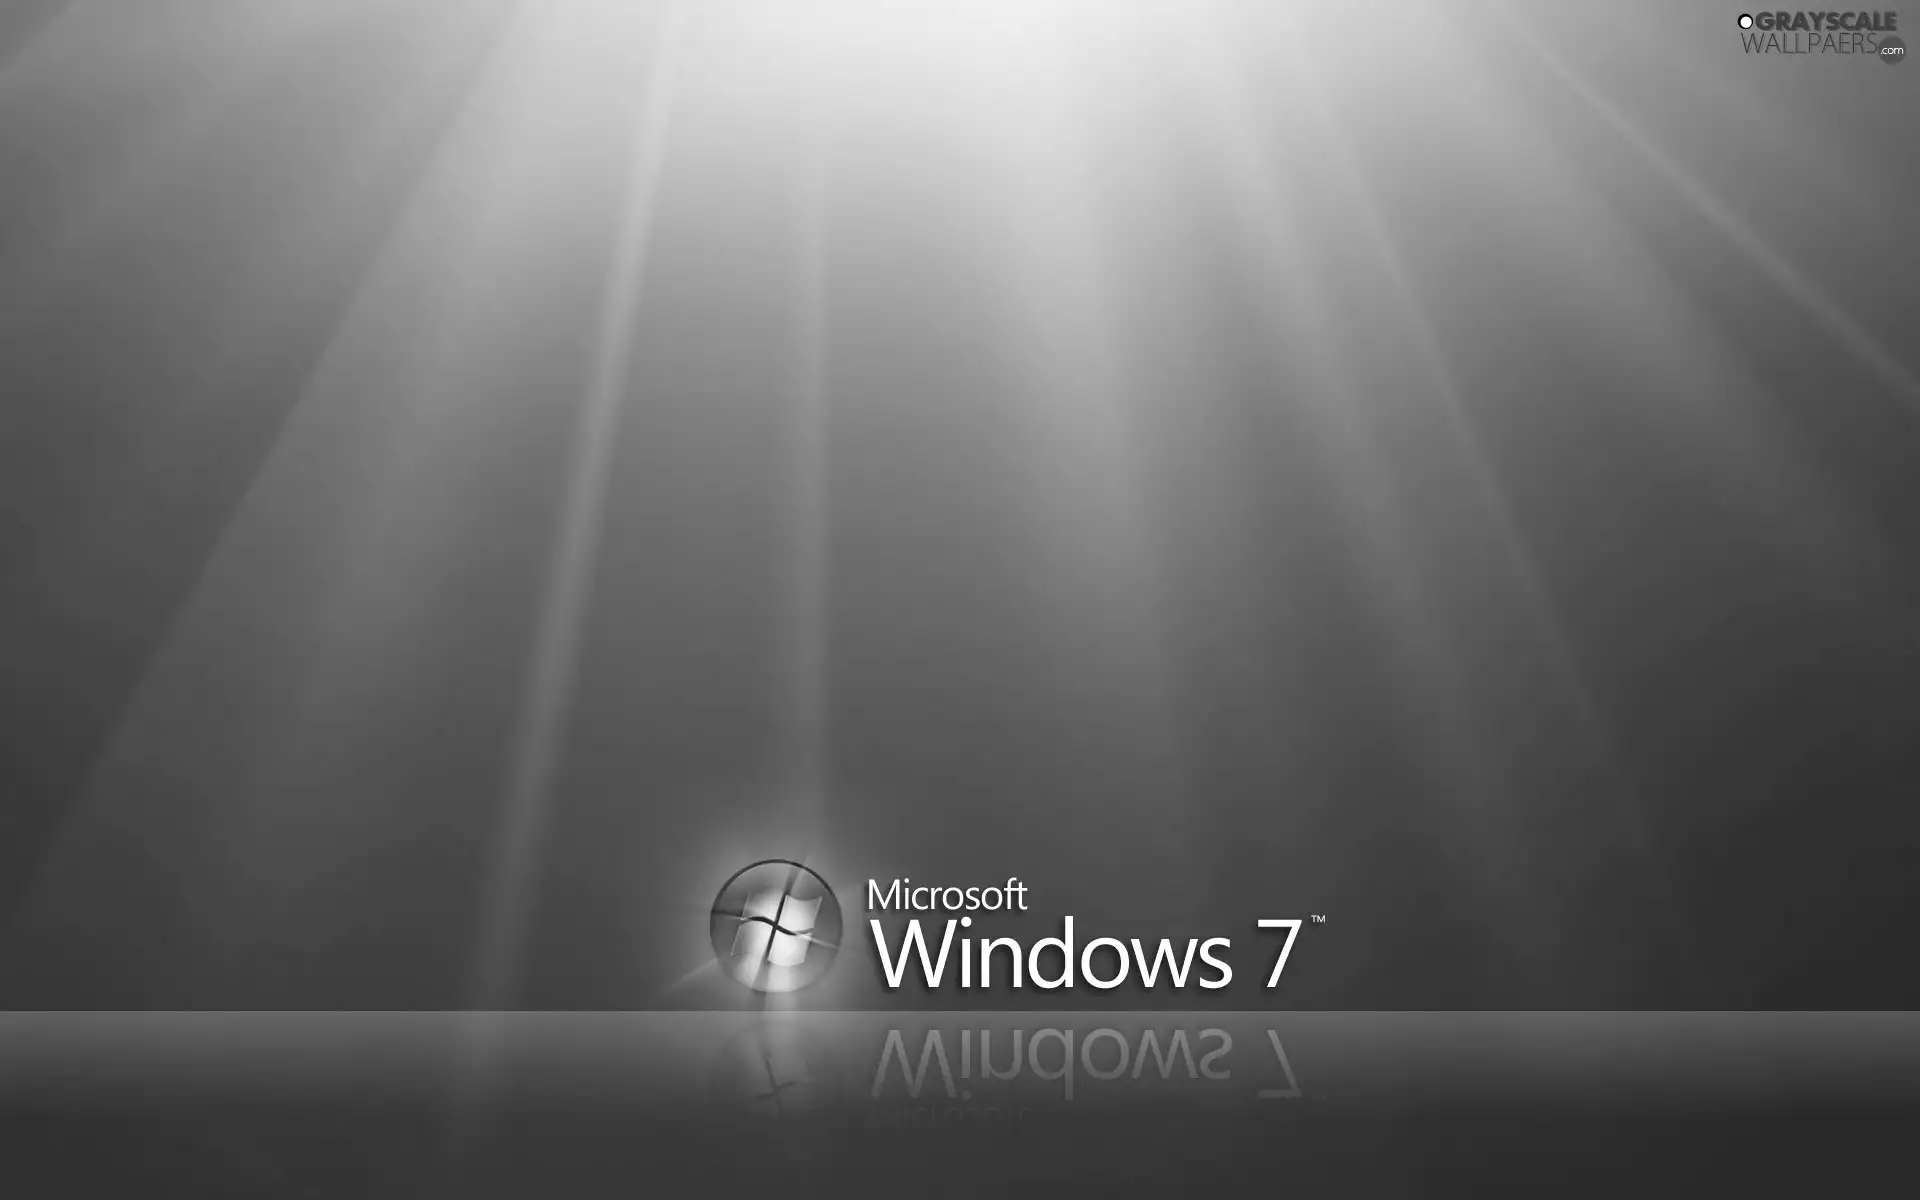 rays, Windows 7